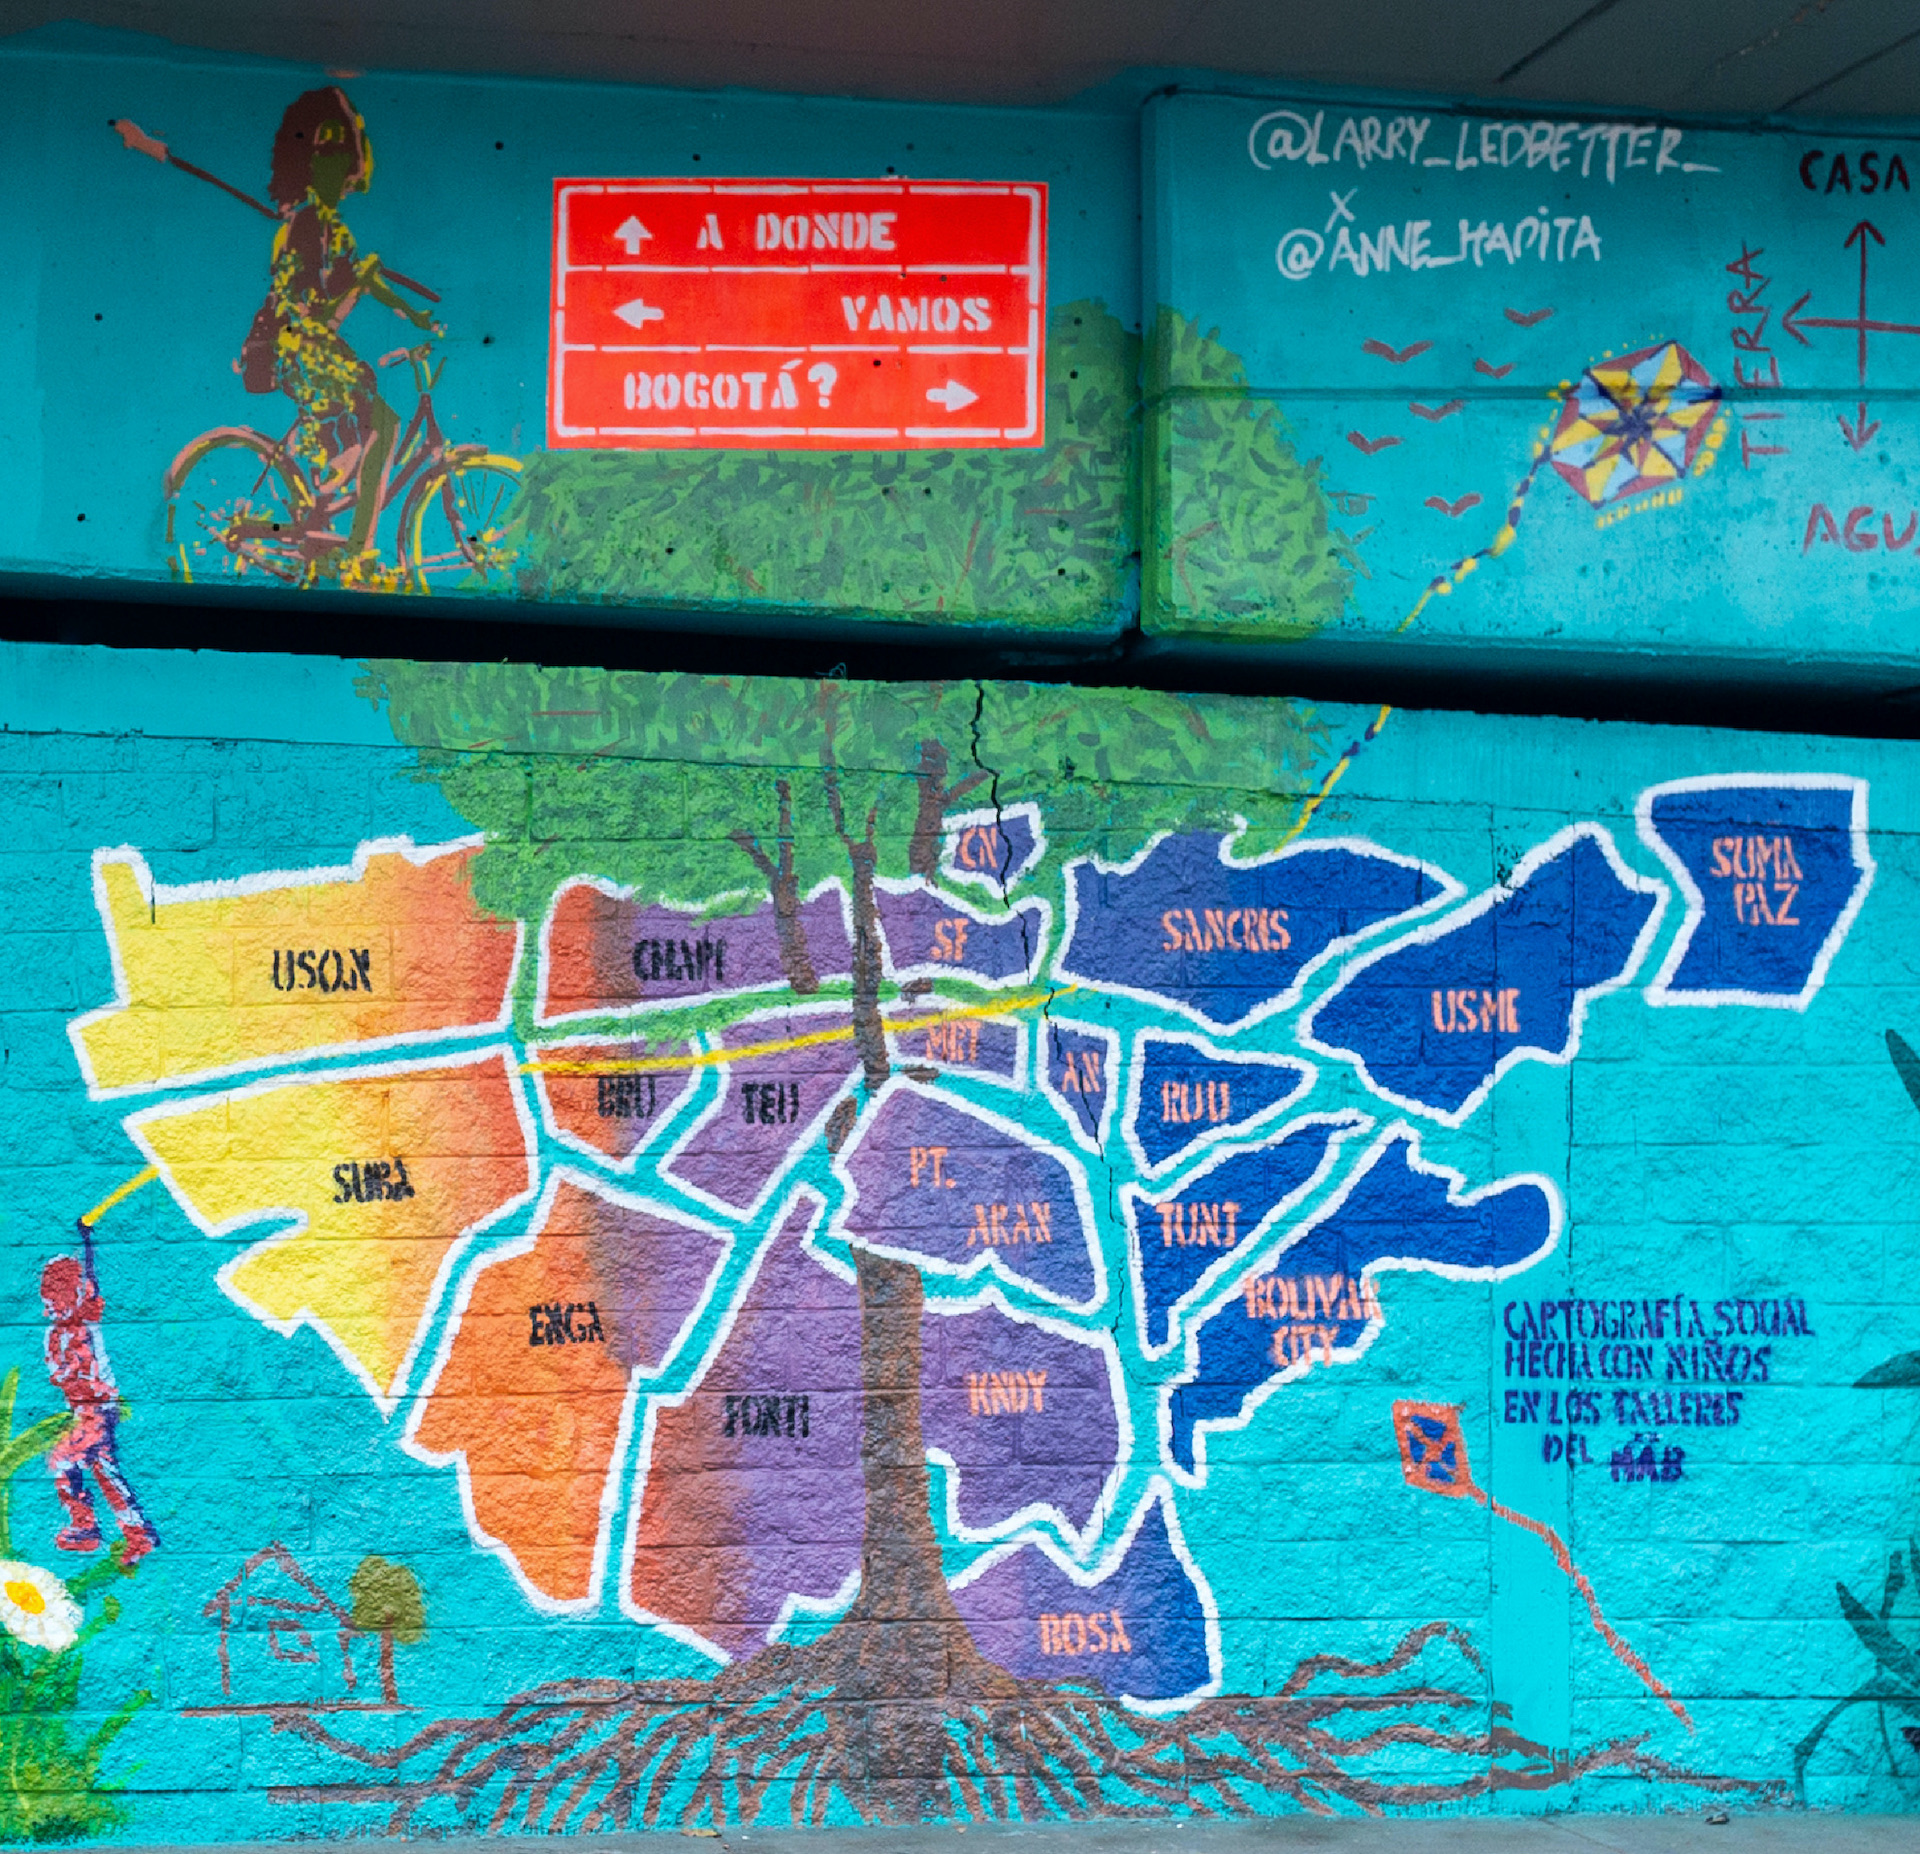 Mural del mapa por localidades de Bogotá